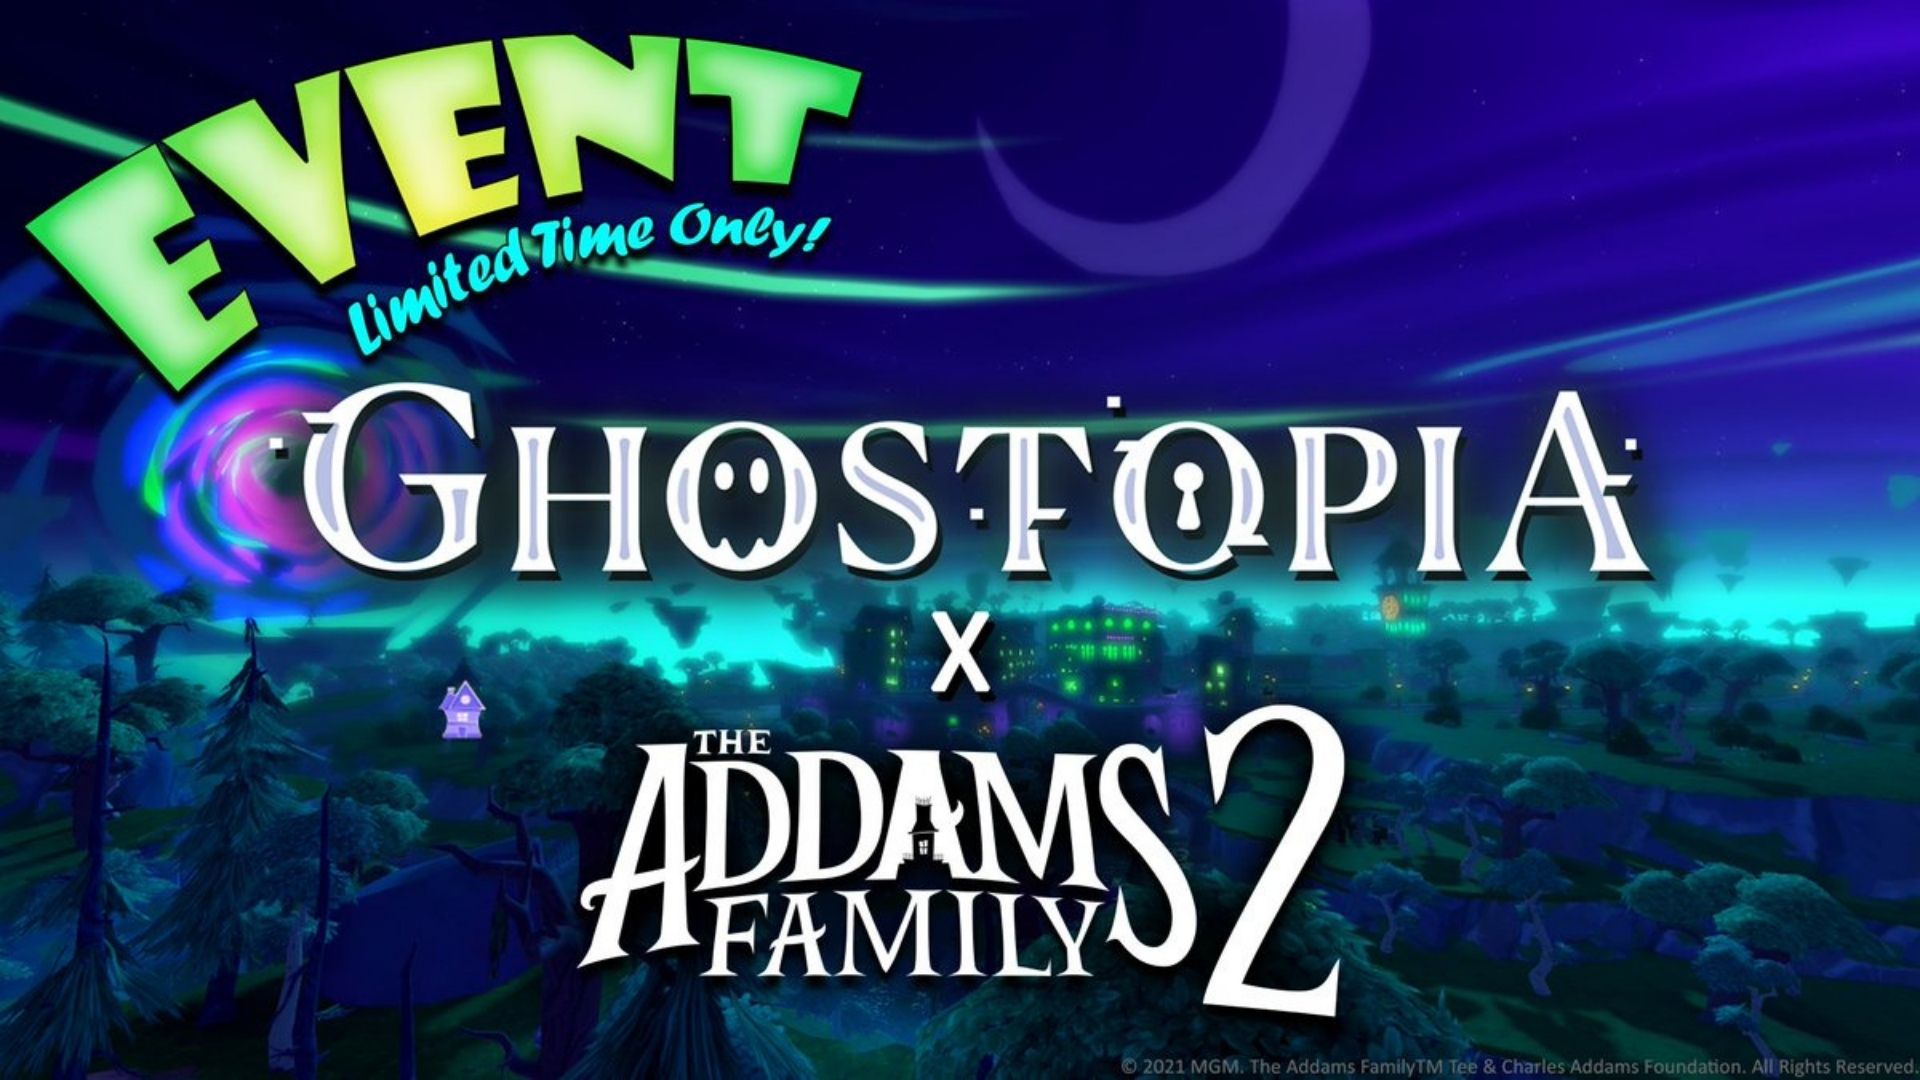 Roblox's Ghostopia The Addams Family 2 event